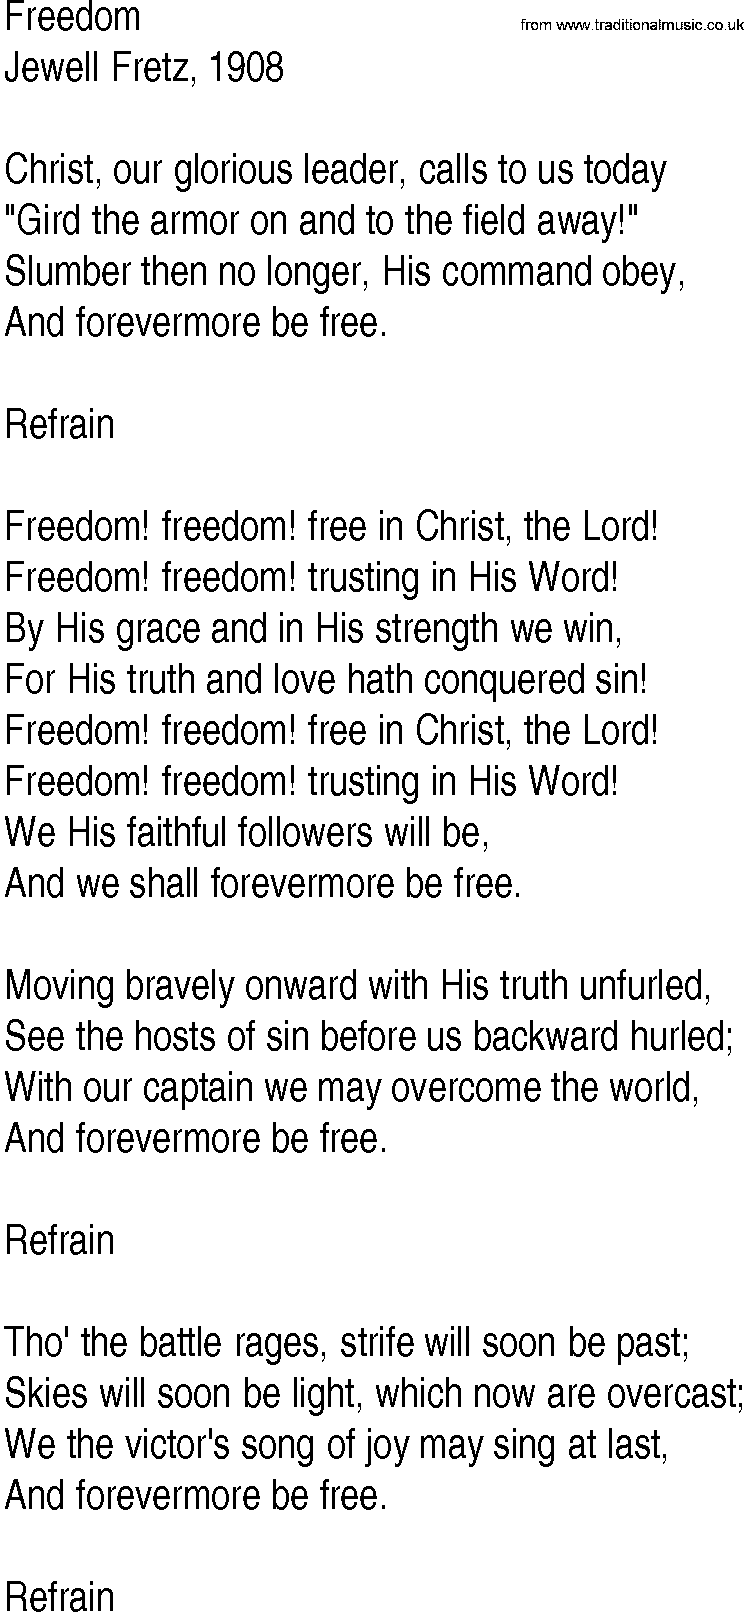 Hymn and Gospel Song: Freedom by Jewell Fretz lyrics